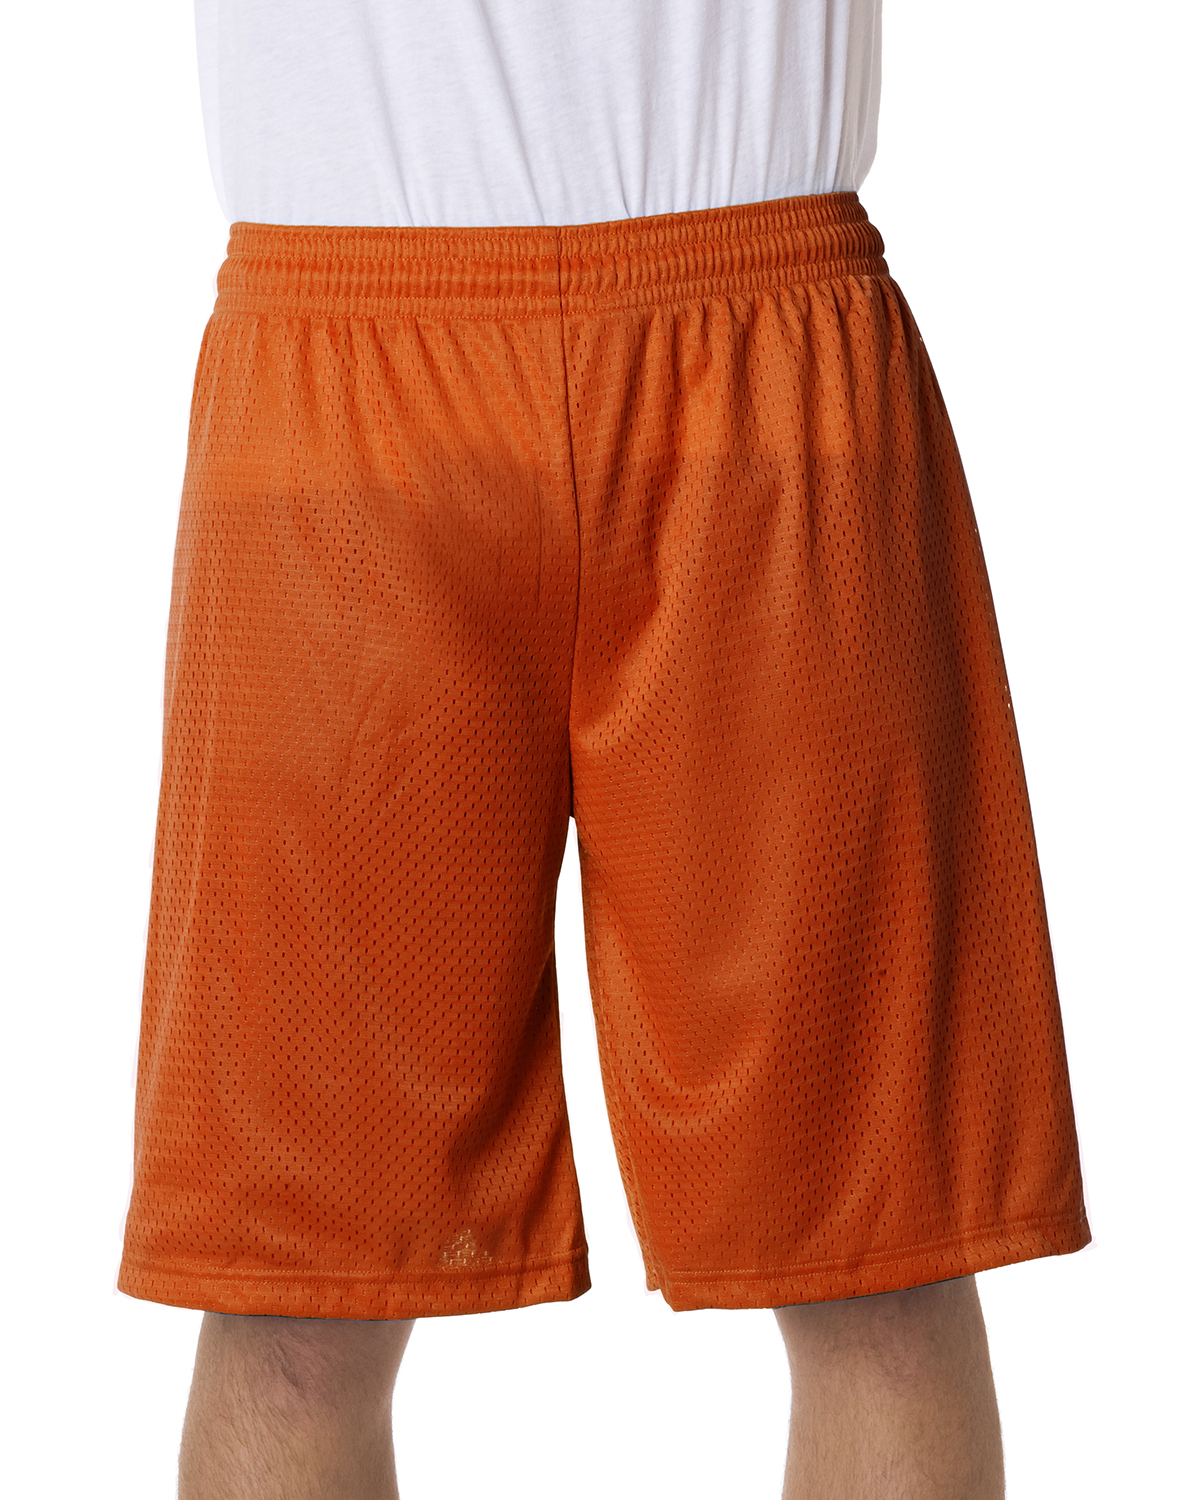 Badger Sport B7211 - Adult Mesh/Tricot 11" Shorts